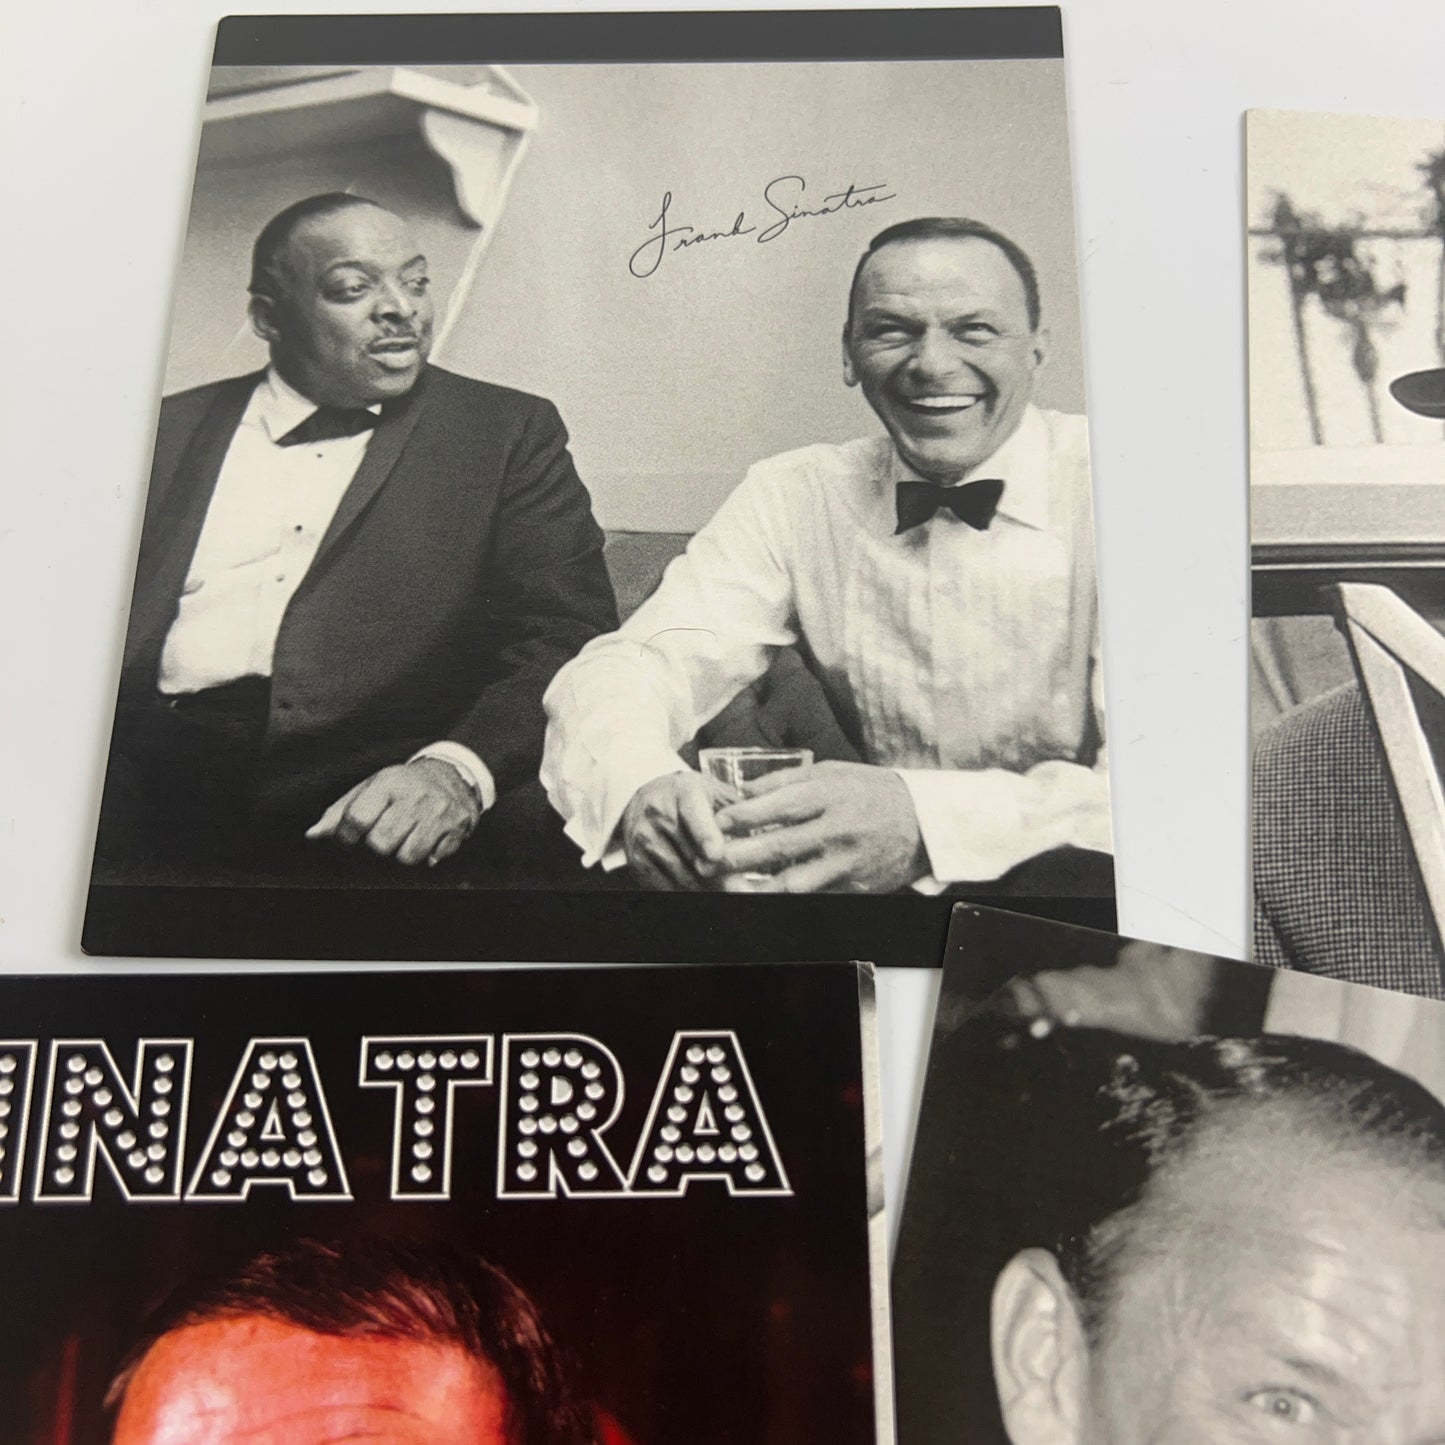 Sinatra: Collector's Edition by Frank Sinatra (CD, Sep-2009, 2 Discs, Madacy)